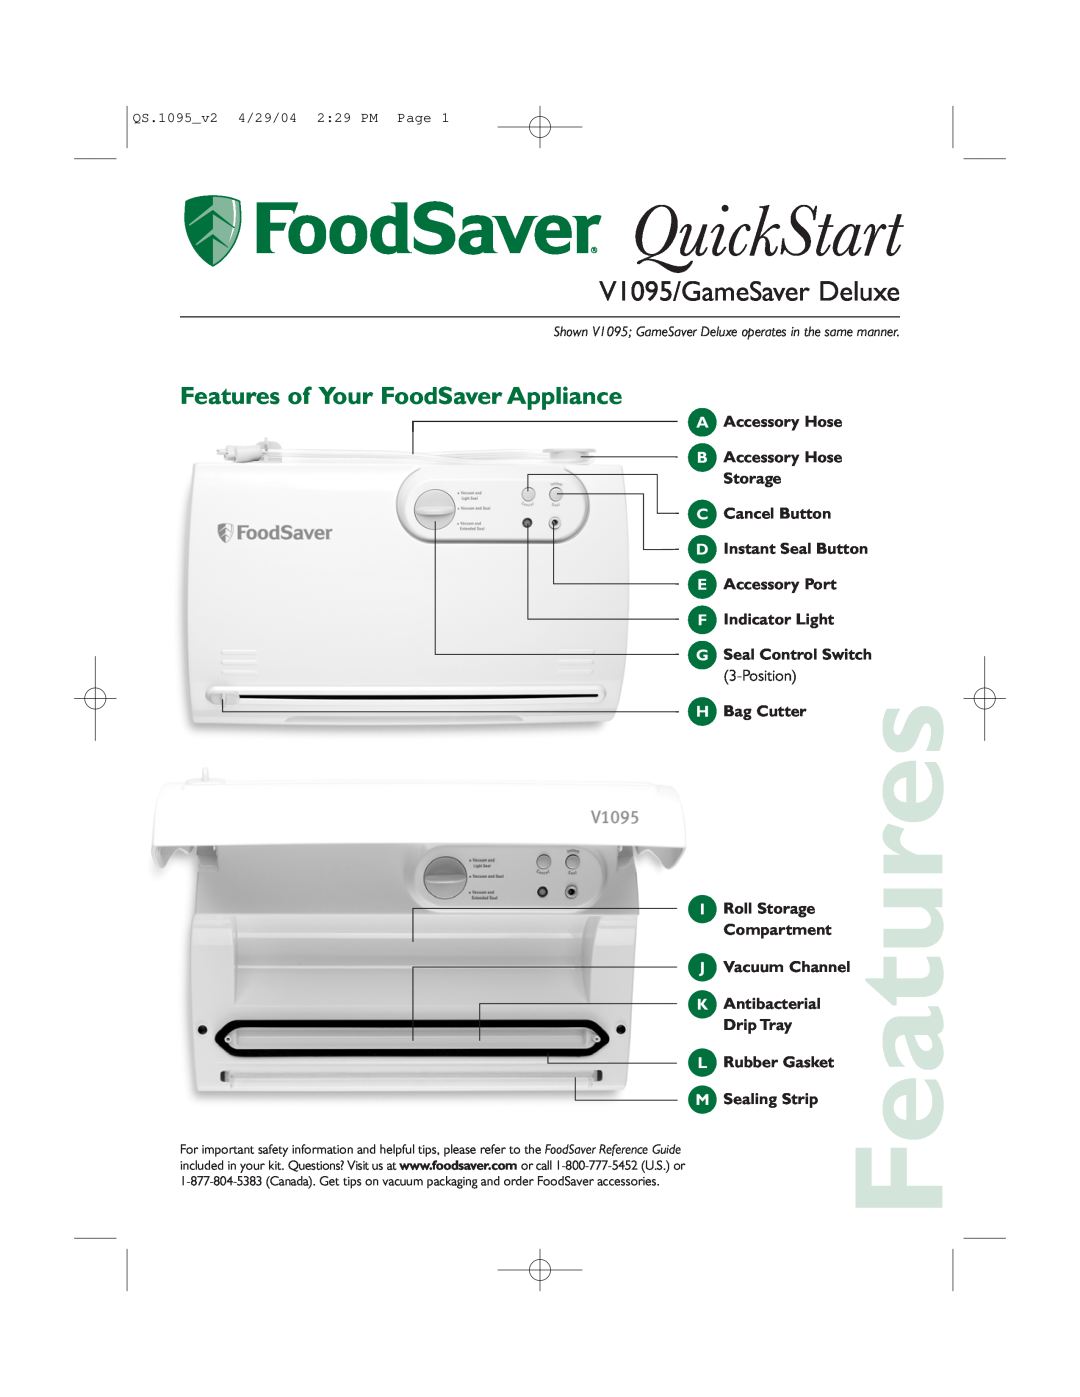 FoodSaver quick start Features of Your FoodSaver Appliance, QuickStart, V1095/GameSaver Deluxe 